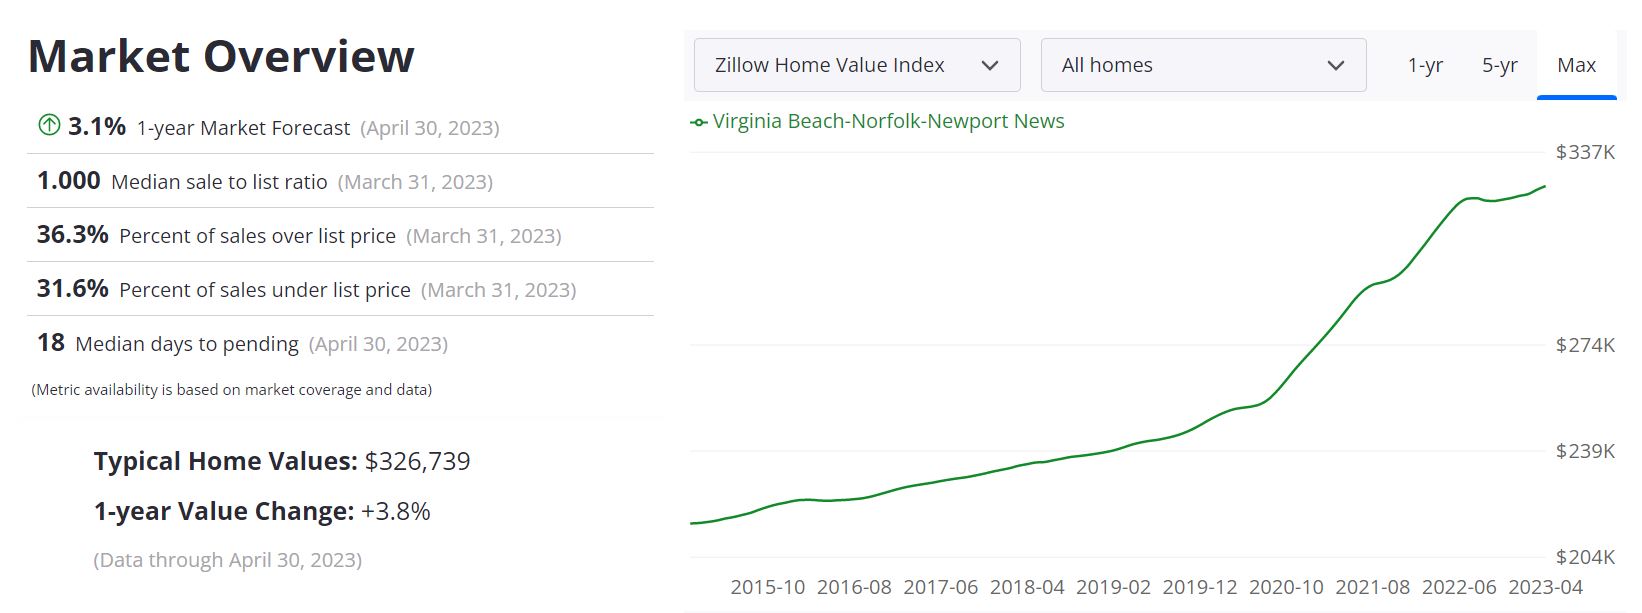 Virginia Beach Housing Market Forecast 